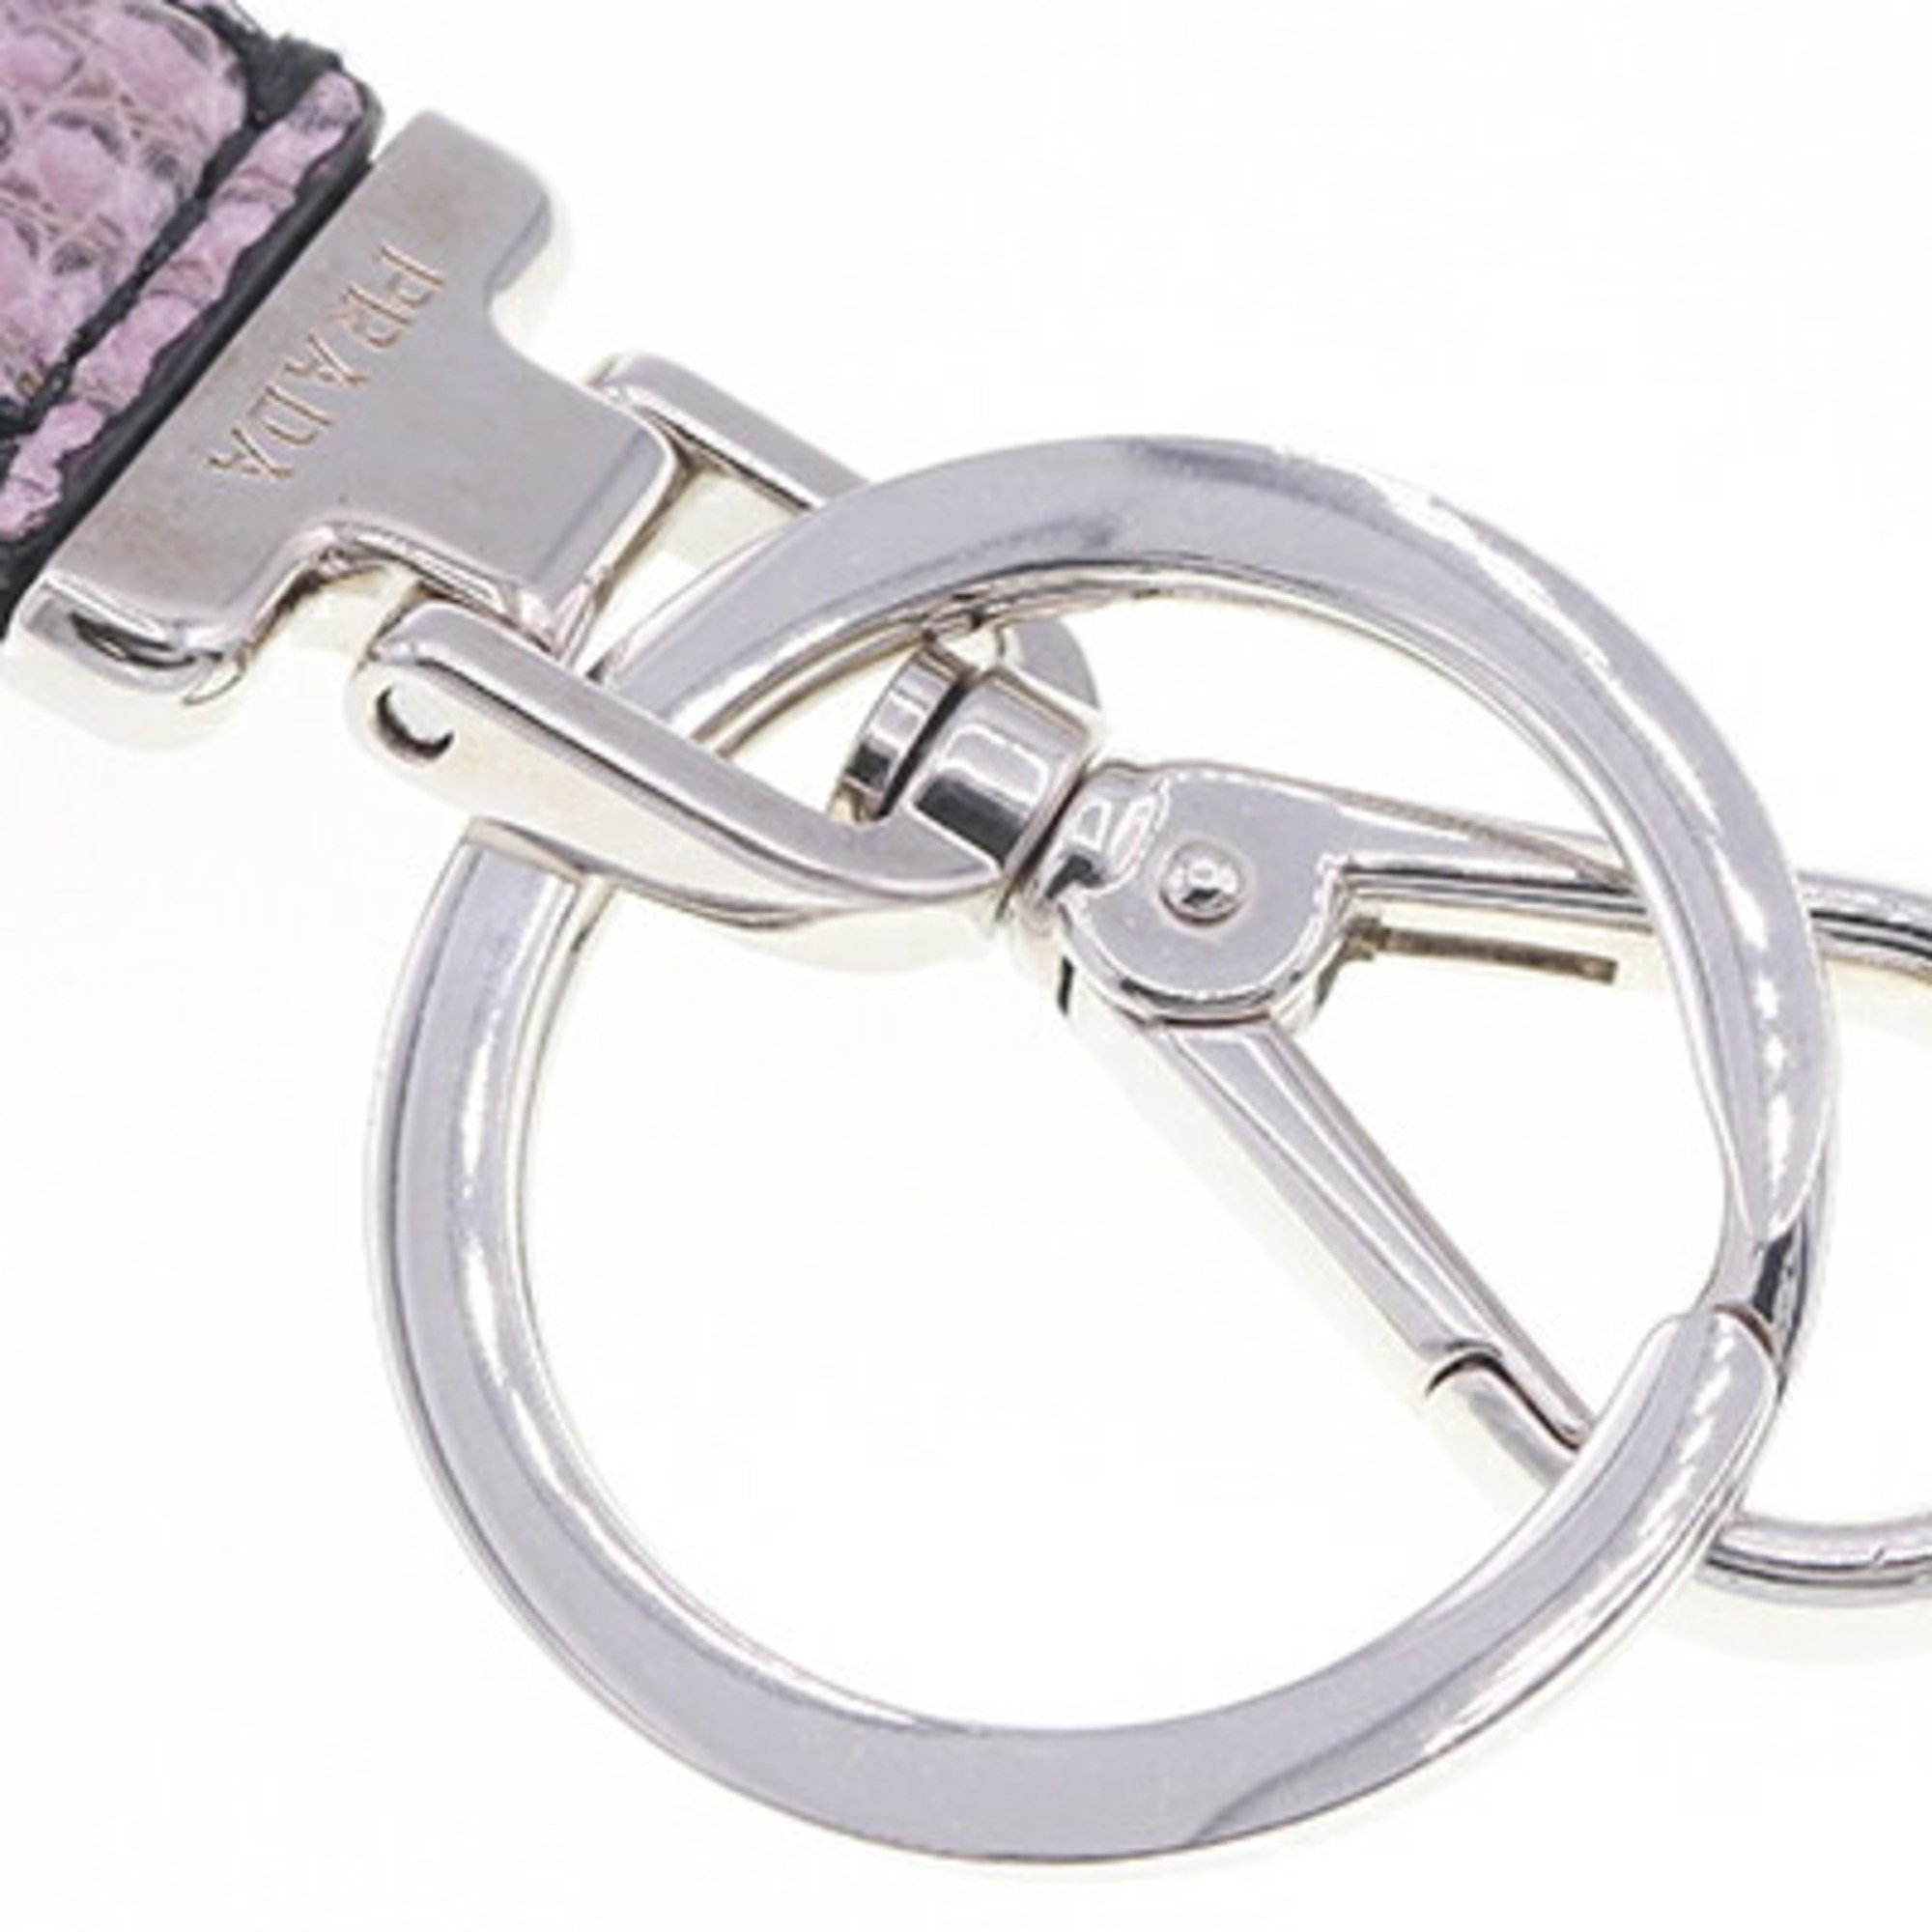 Prada Key Holder 1PF726 Pink Black Leather Ring Bag Charm Women's PRADA